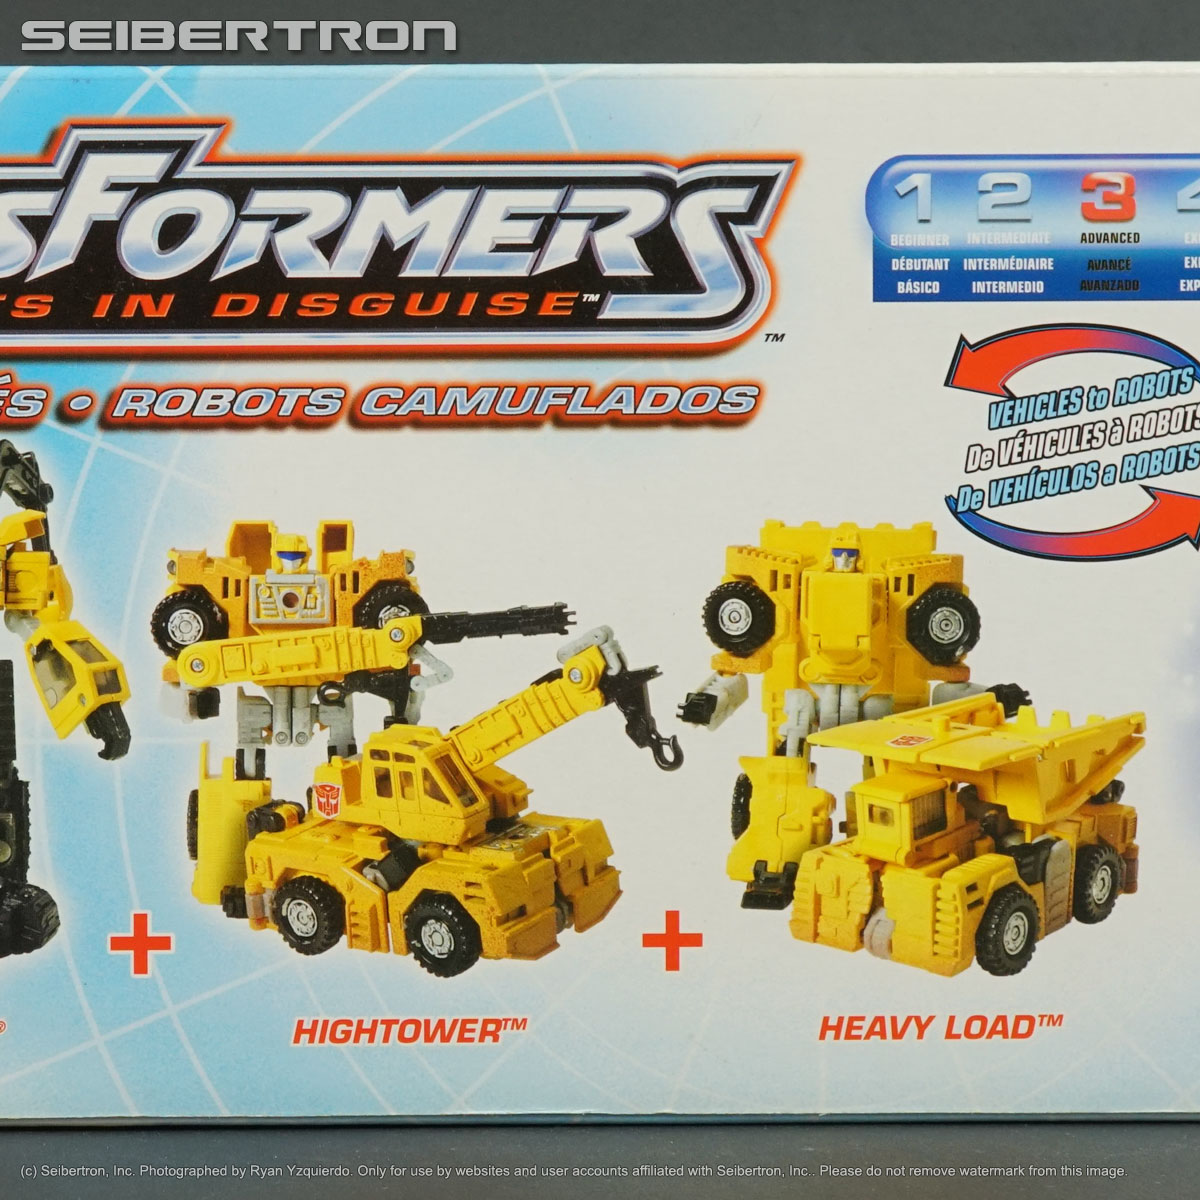 LANDFILL set Transformers Robots In Disguise RID Wal-Mart yellow Hasbro 2003 New